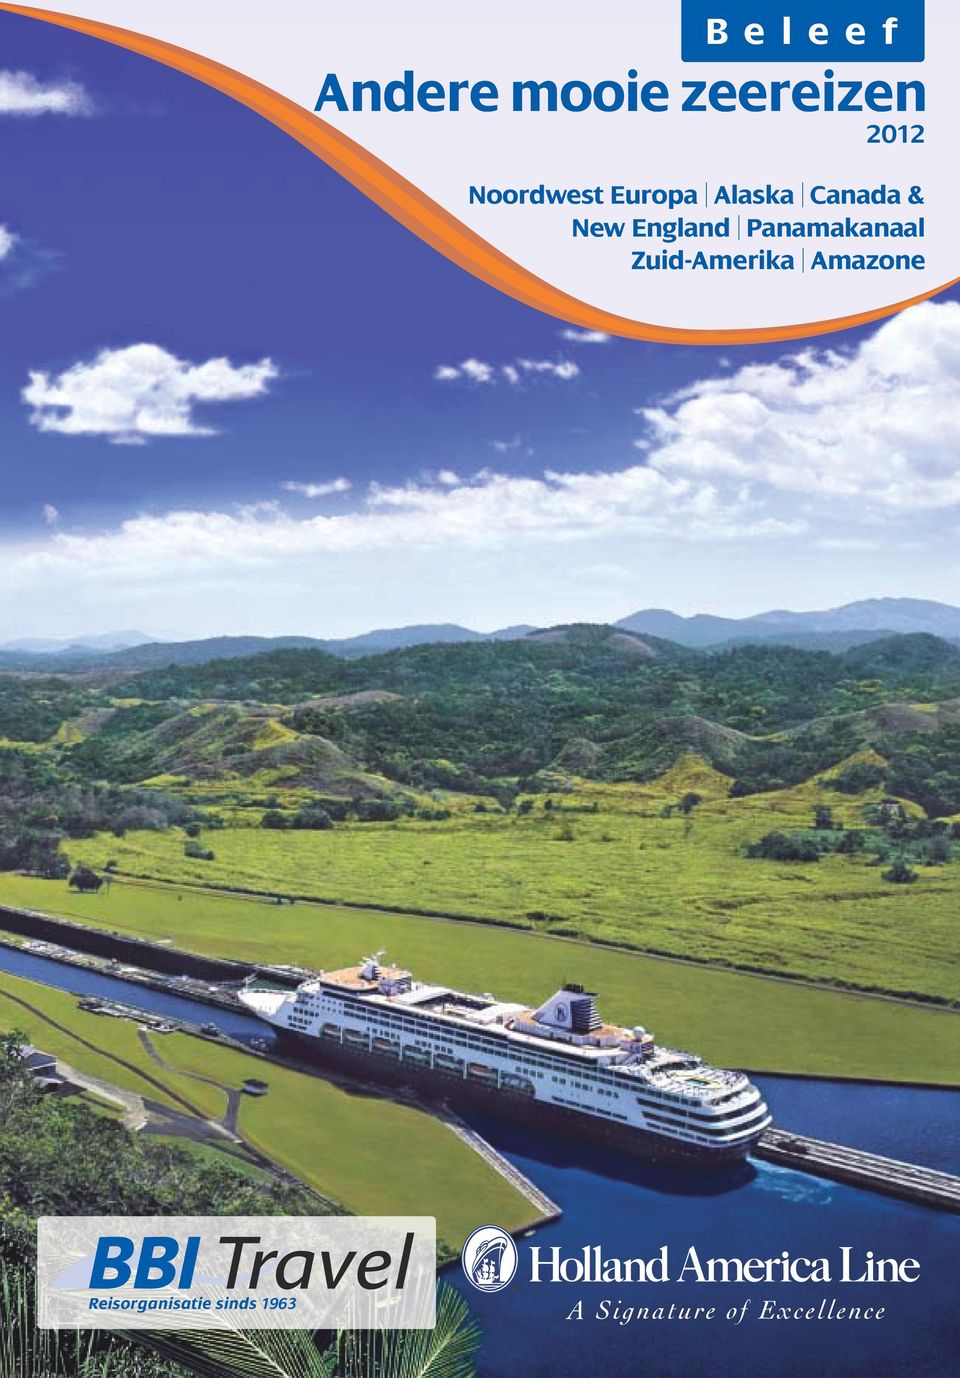 England Panamakanaal Zuid-Amerika Amazone